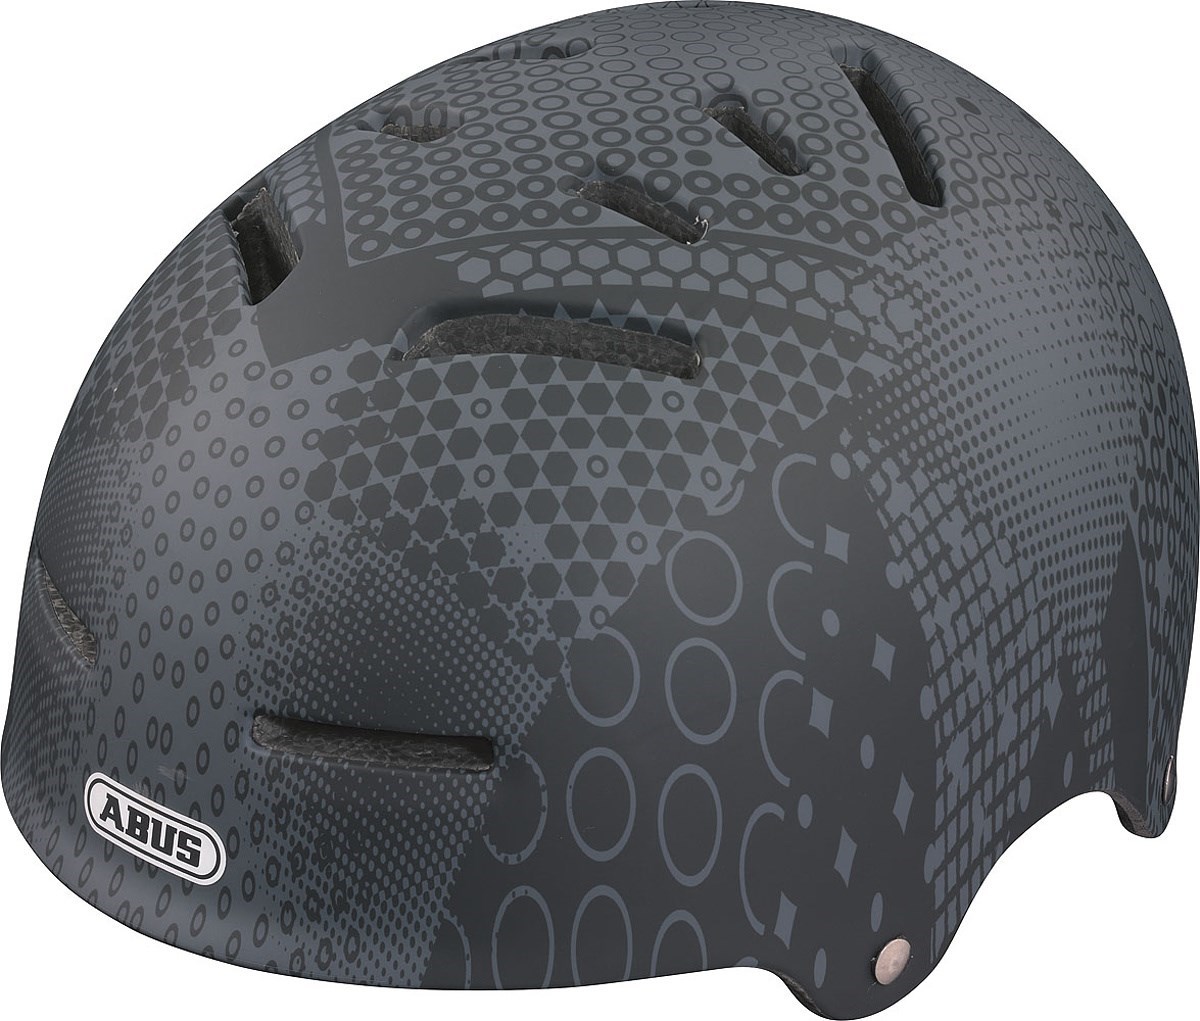 Abus Aven-U Urban Cycling Helmet product image